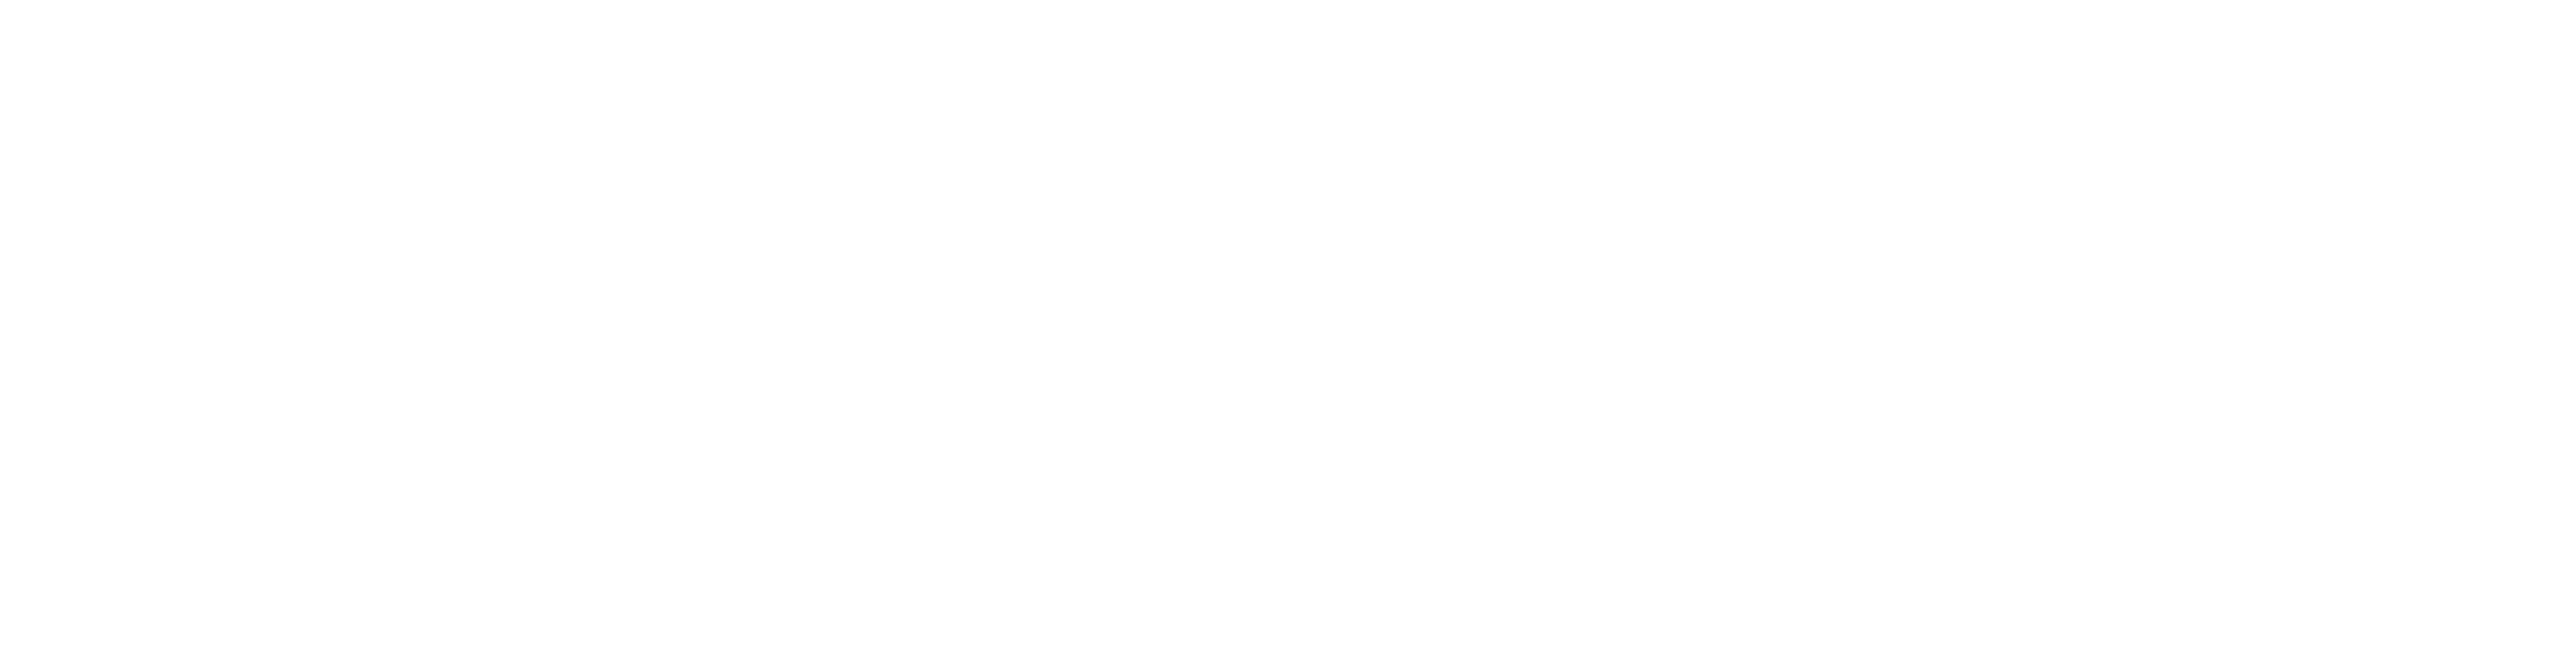 Psycast logo